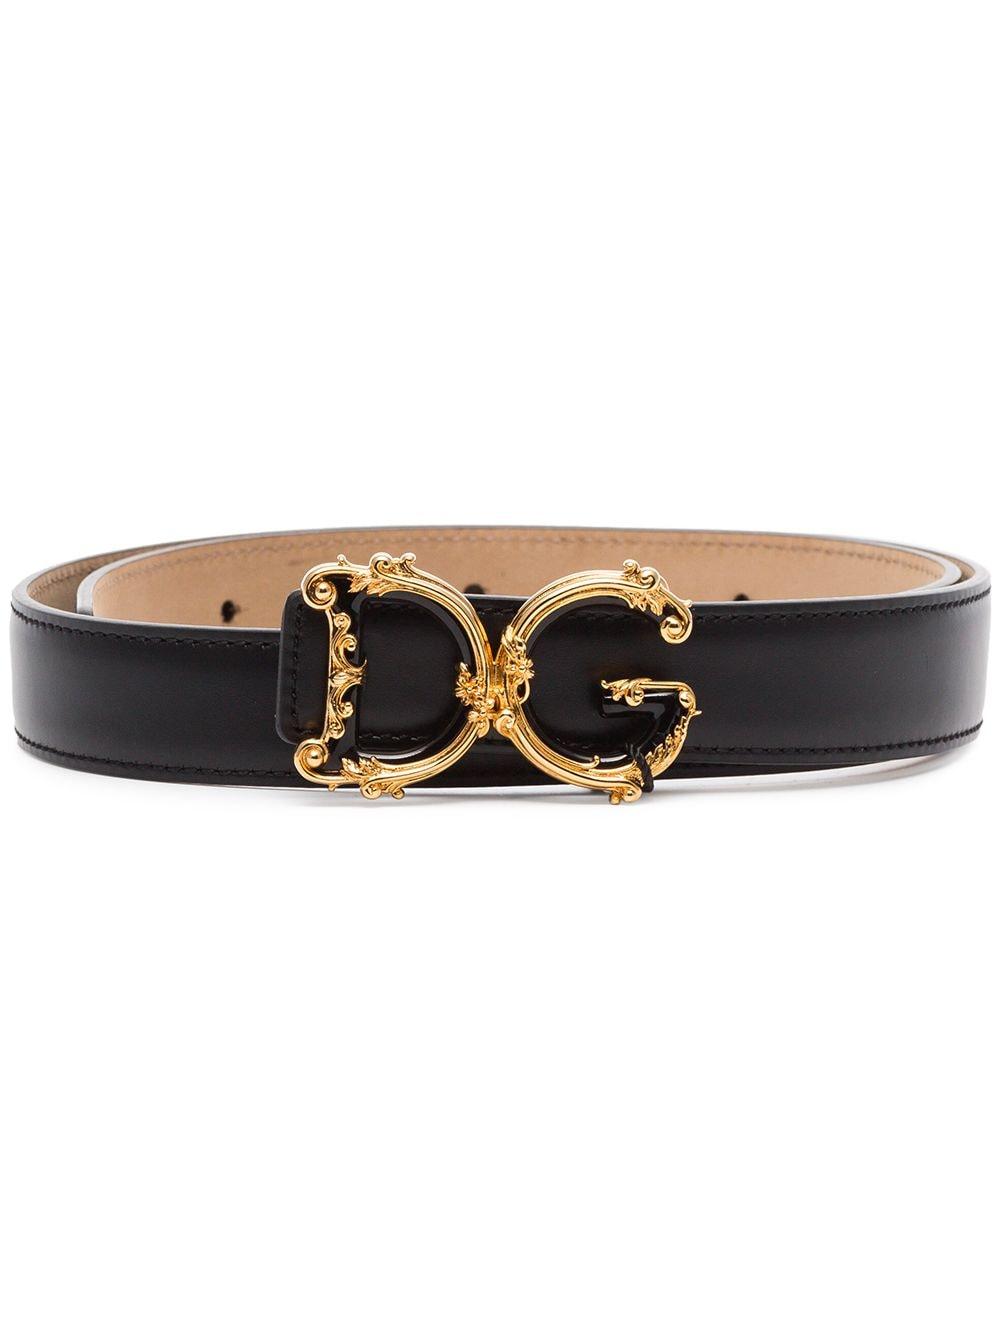 Dolce & Gabbana Leather Baroque Logo Plaque Belt in Black - Lyst